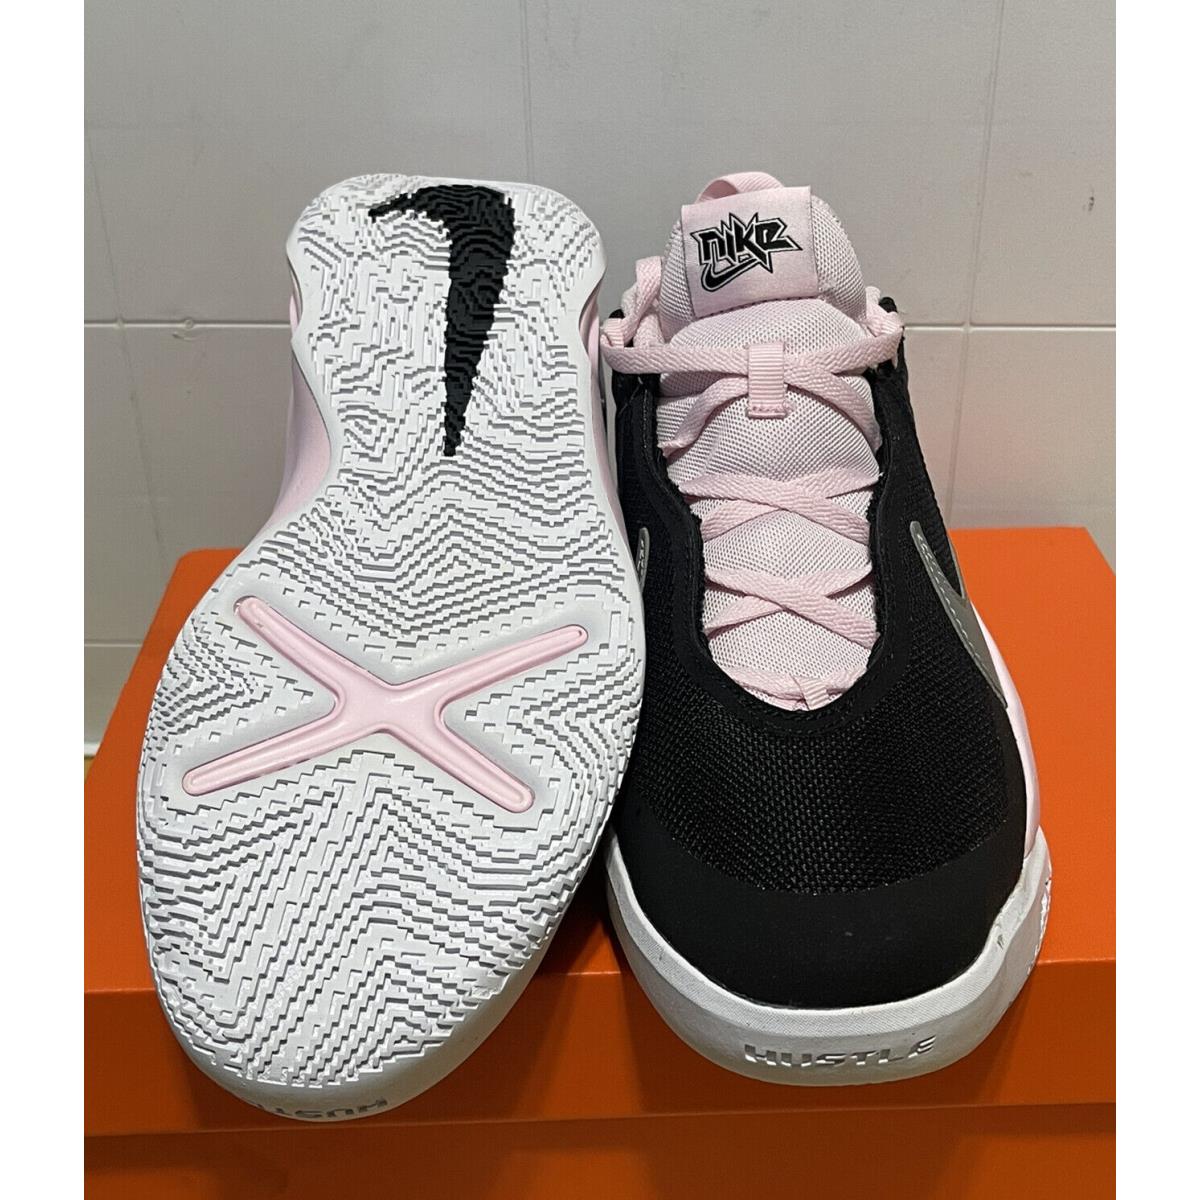 Nike shoes  - Black/ pink 3